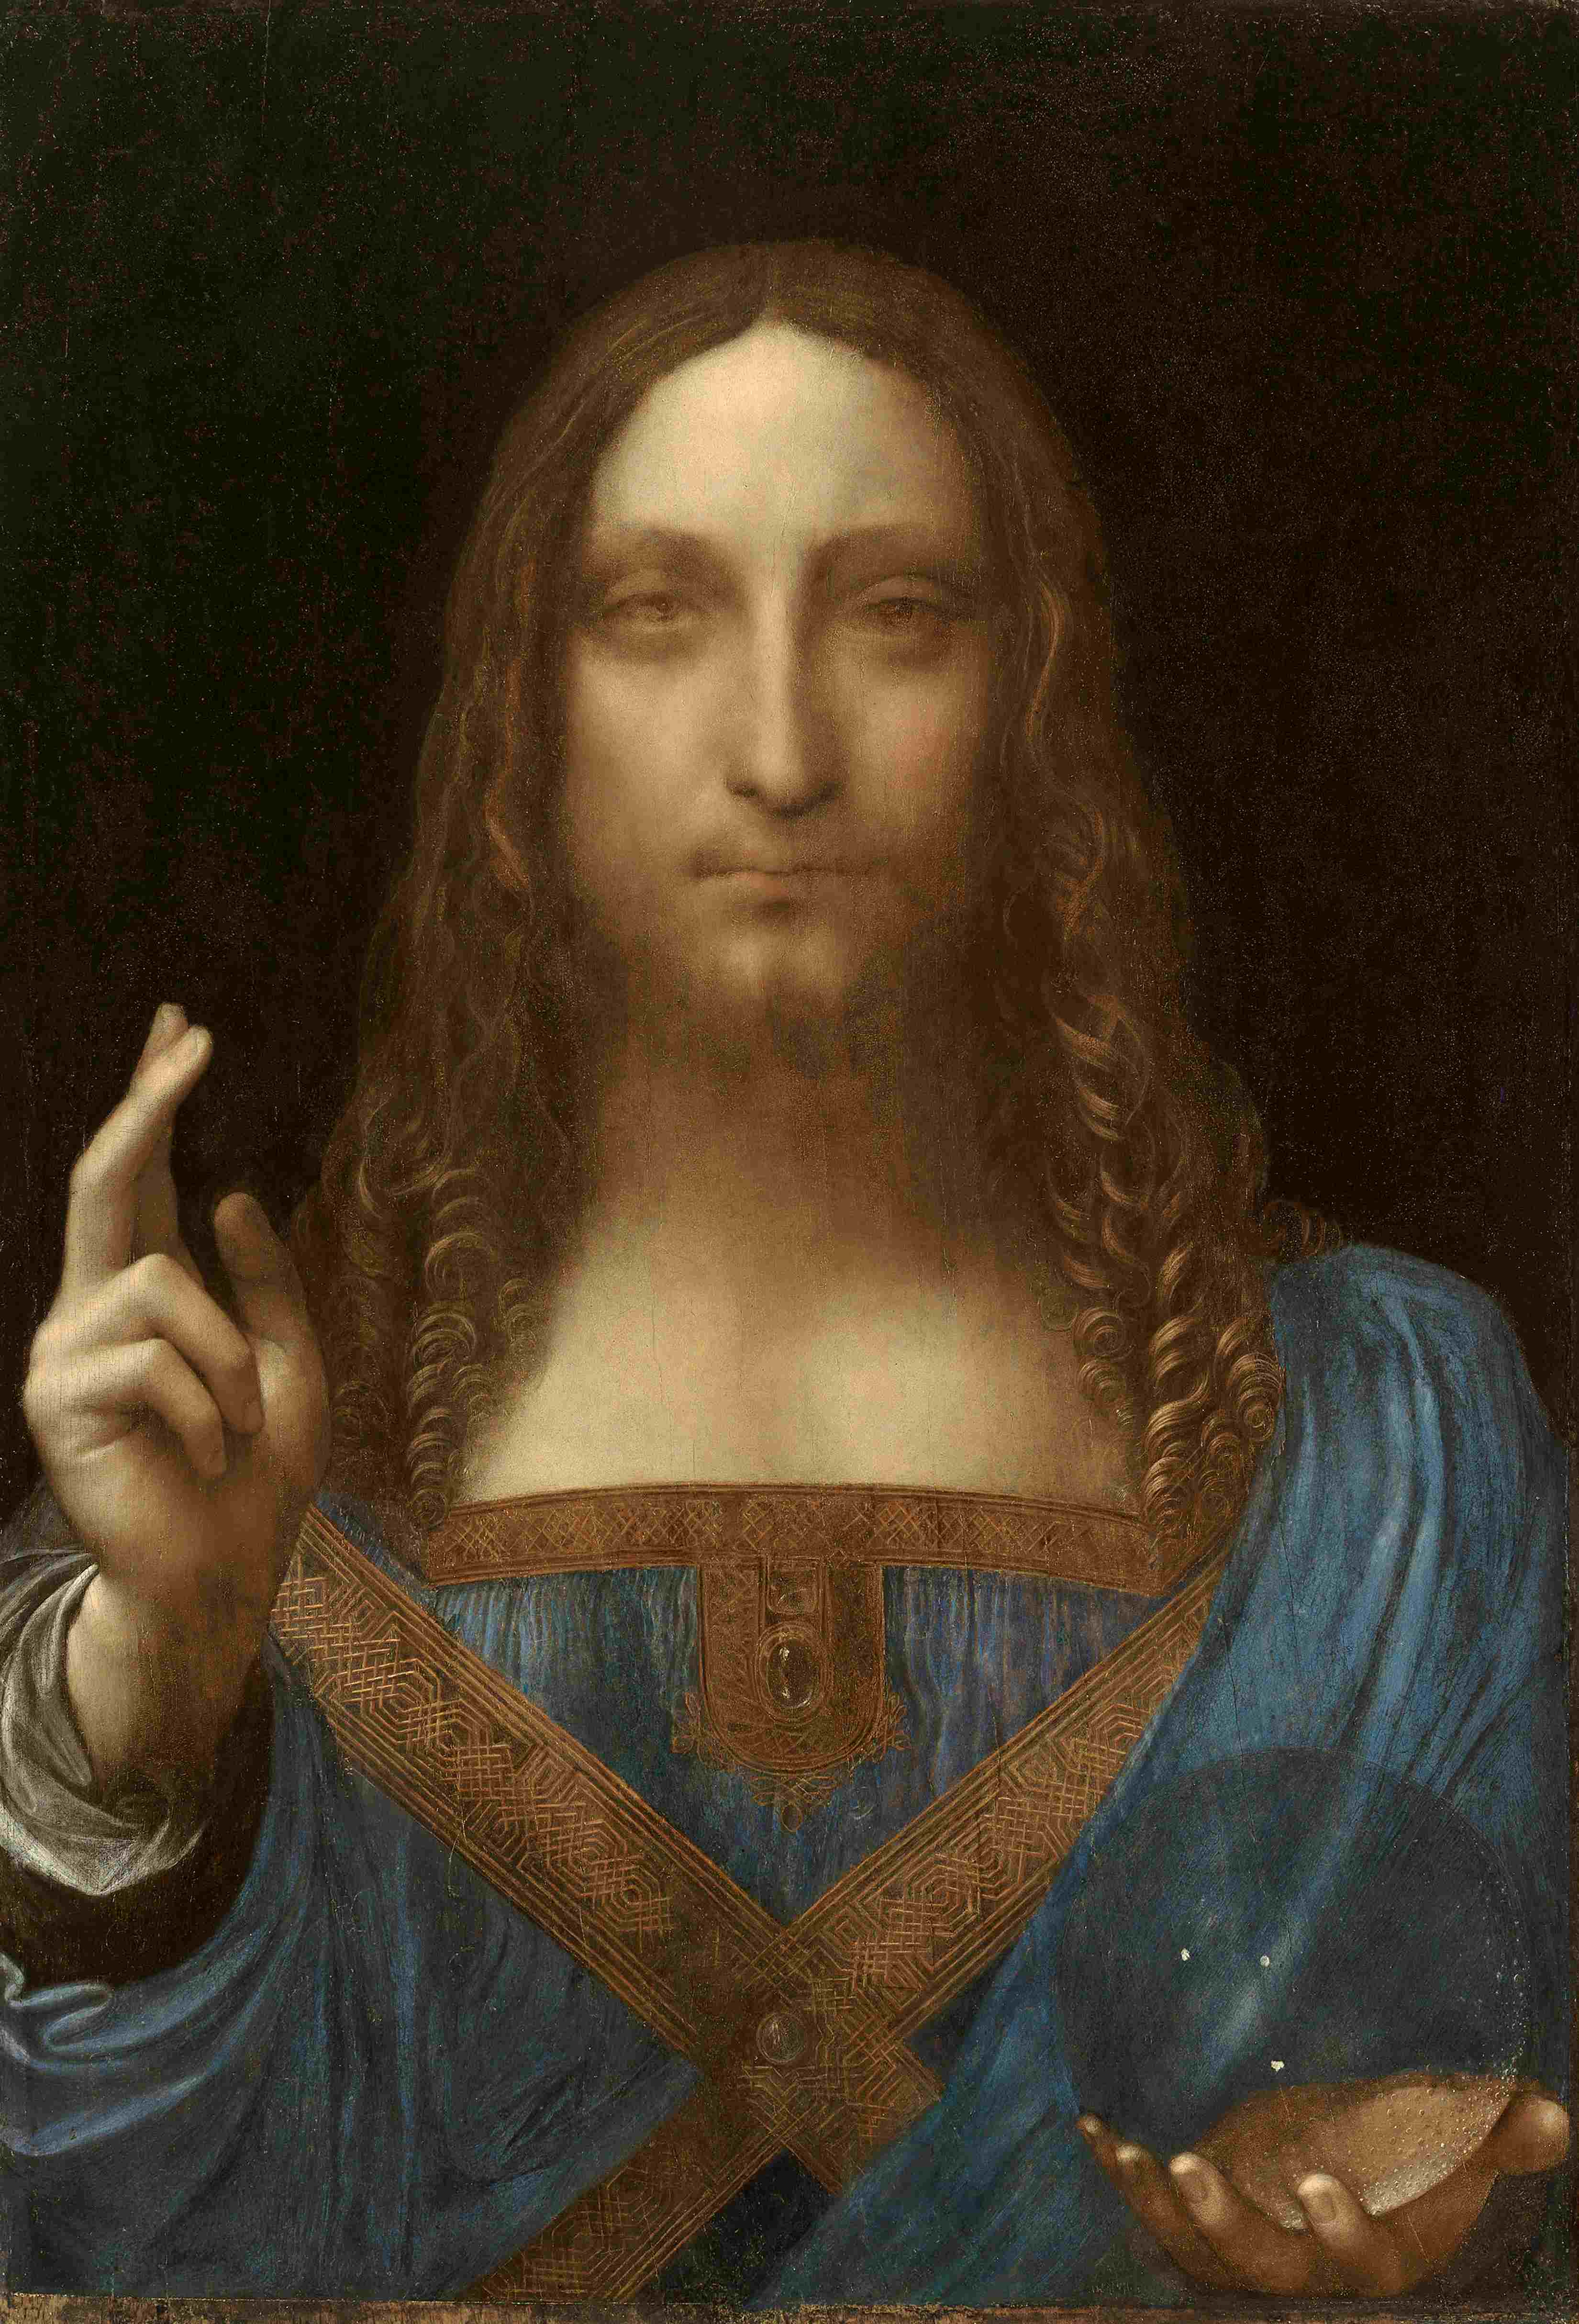 Images Wikimedia Commons/14 Leonardo_da_Vinci,_Salvator_Mundi,_c.1500,_oil_on_walnut.jpg